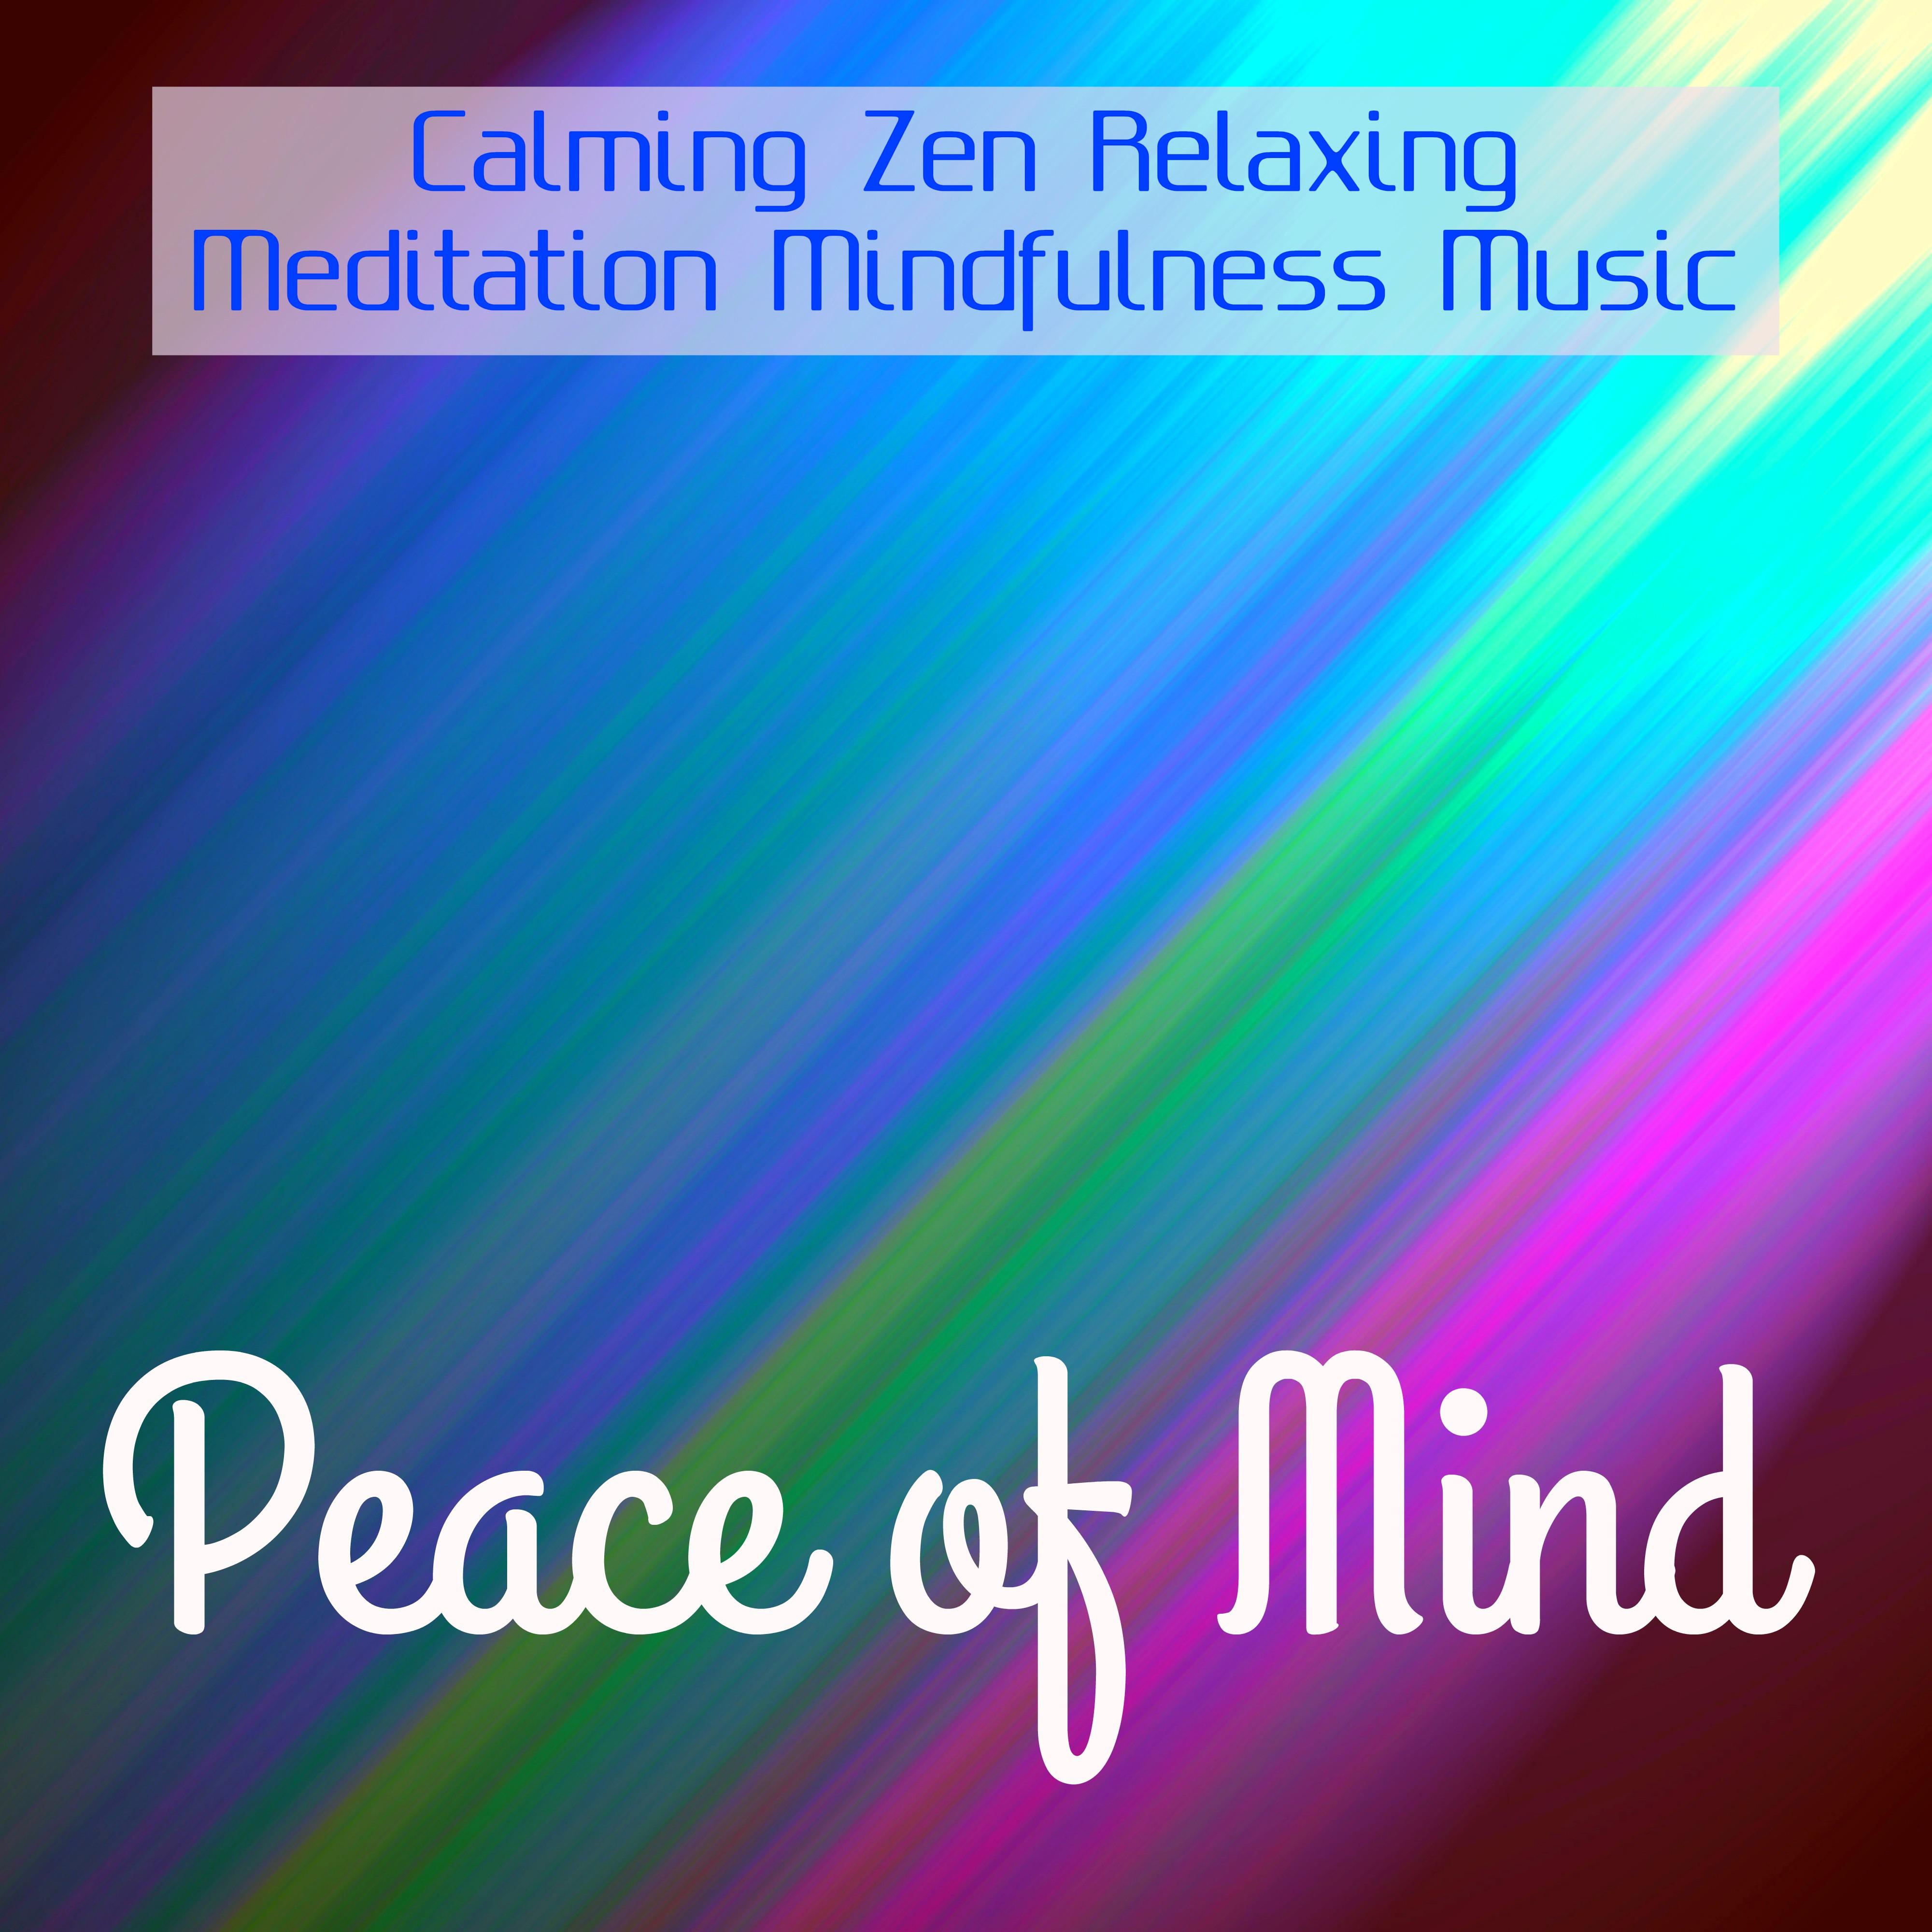 Peace of Mind - Calming Zen Relaxing Meditation Mindfulness Music for Spiritual Light Healing Massage Free Life